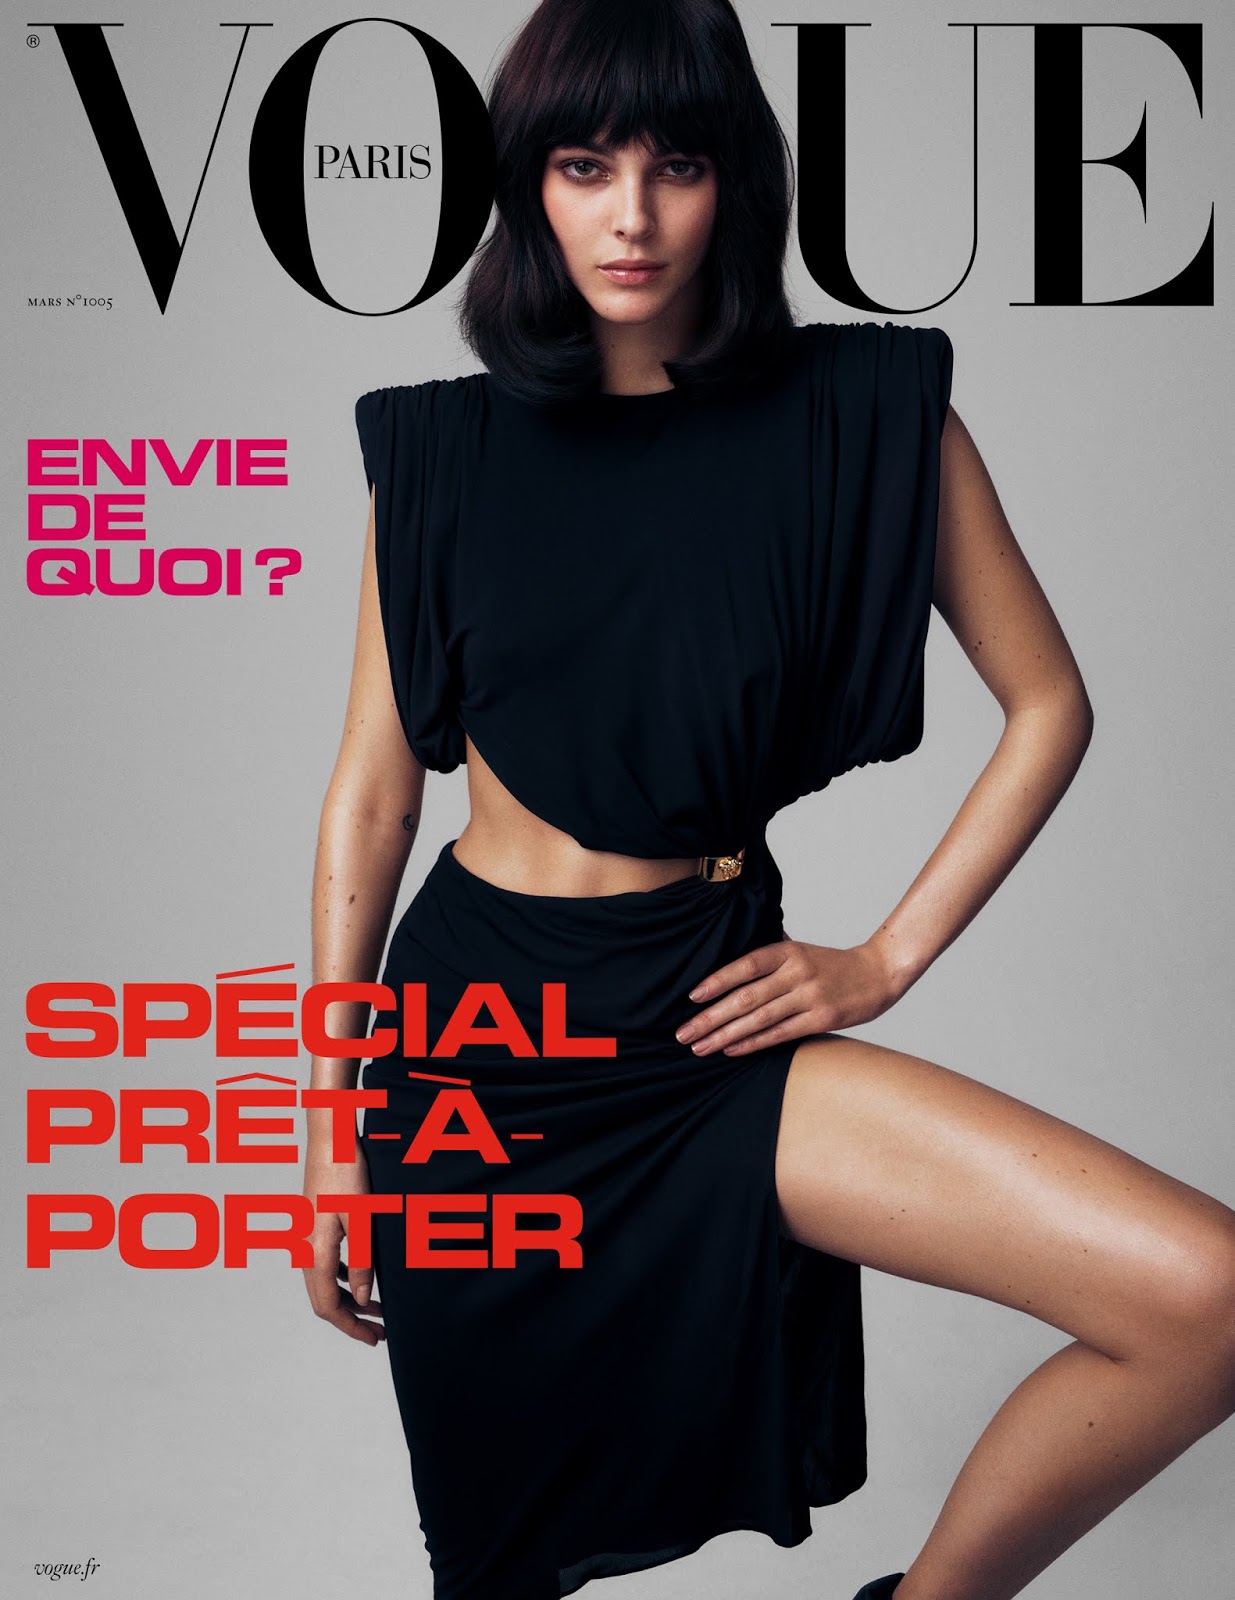 Vogue Paris March 2020 Cover Story Editorial